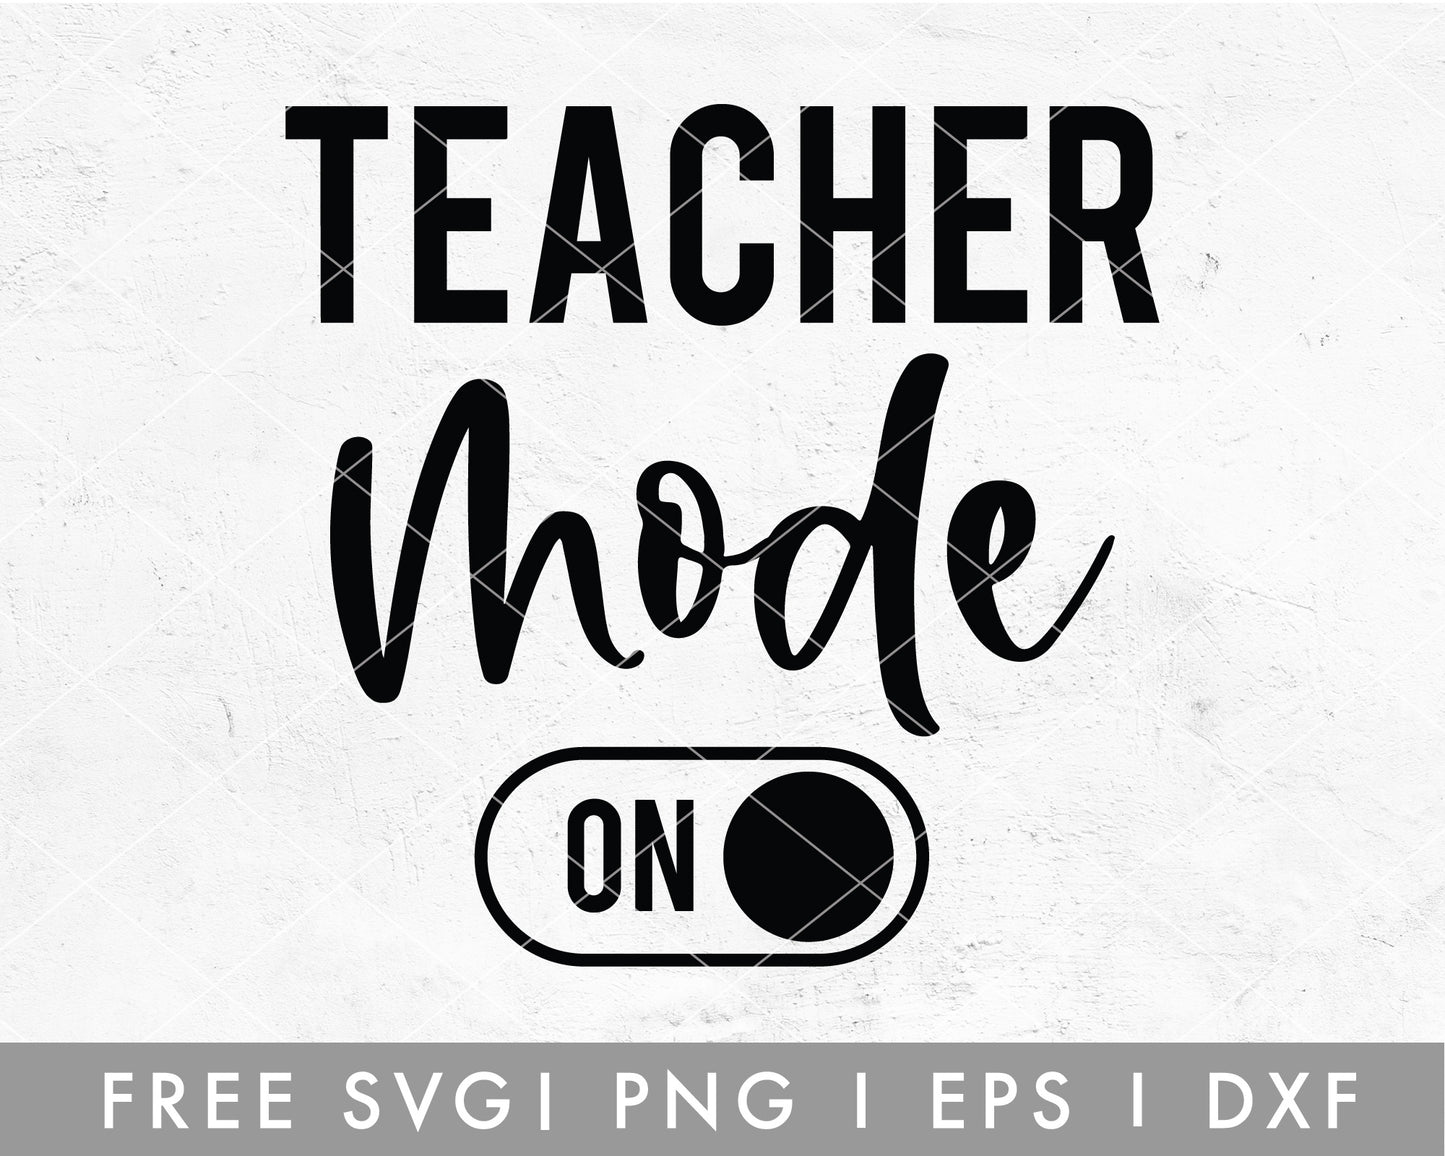 FREE Teacher Mode On SVG